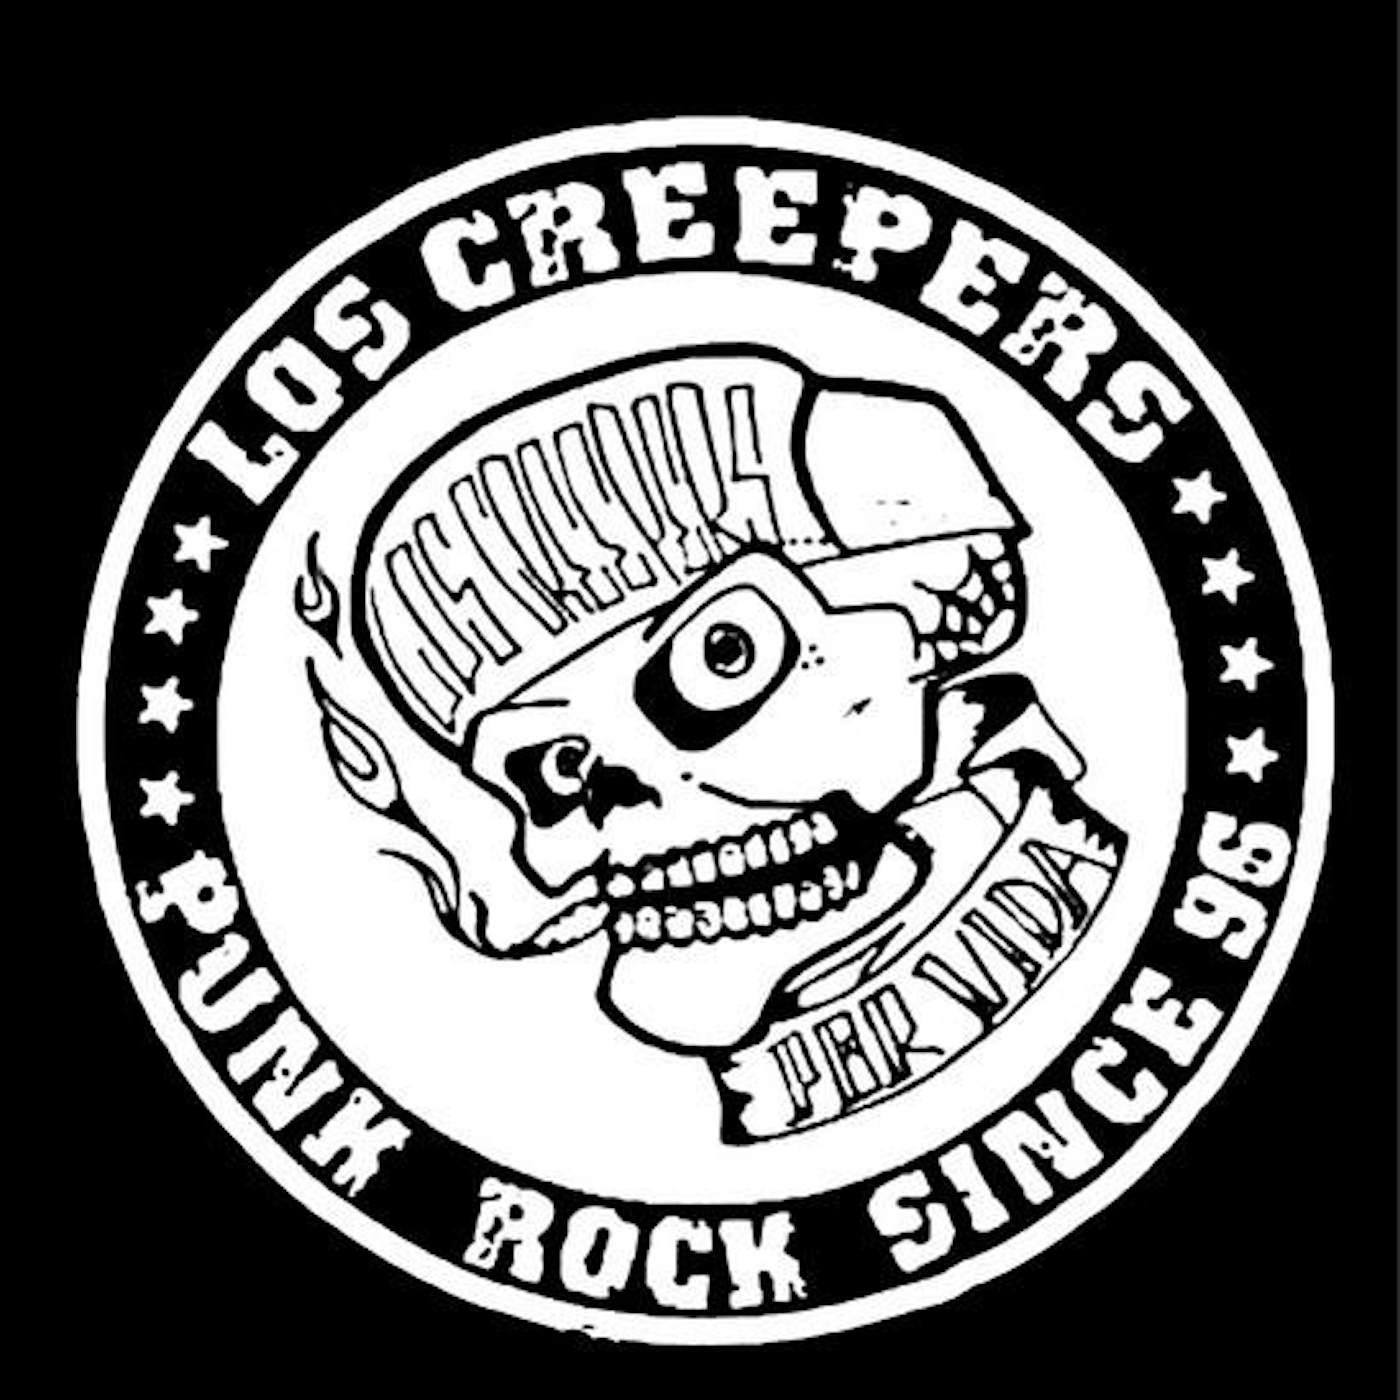 Los Creepers